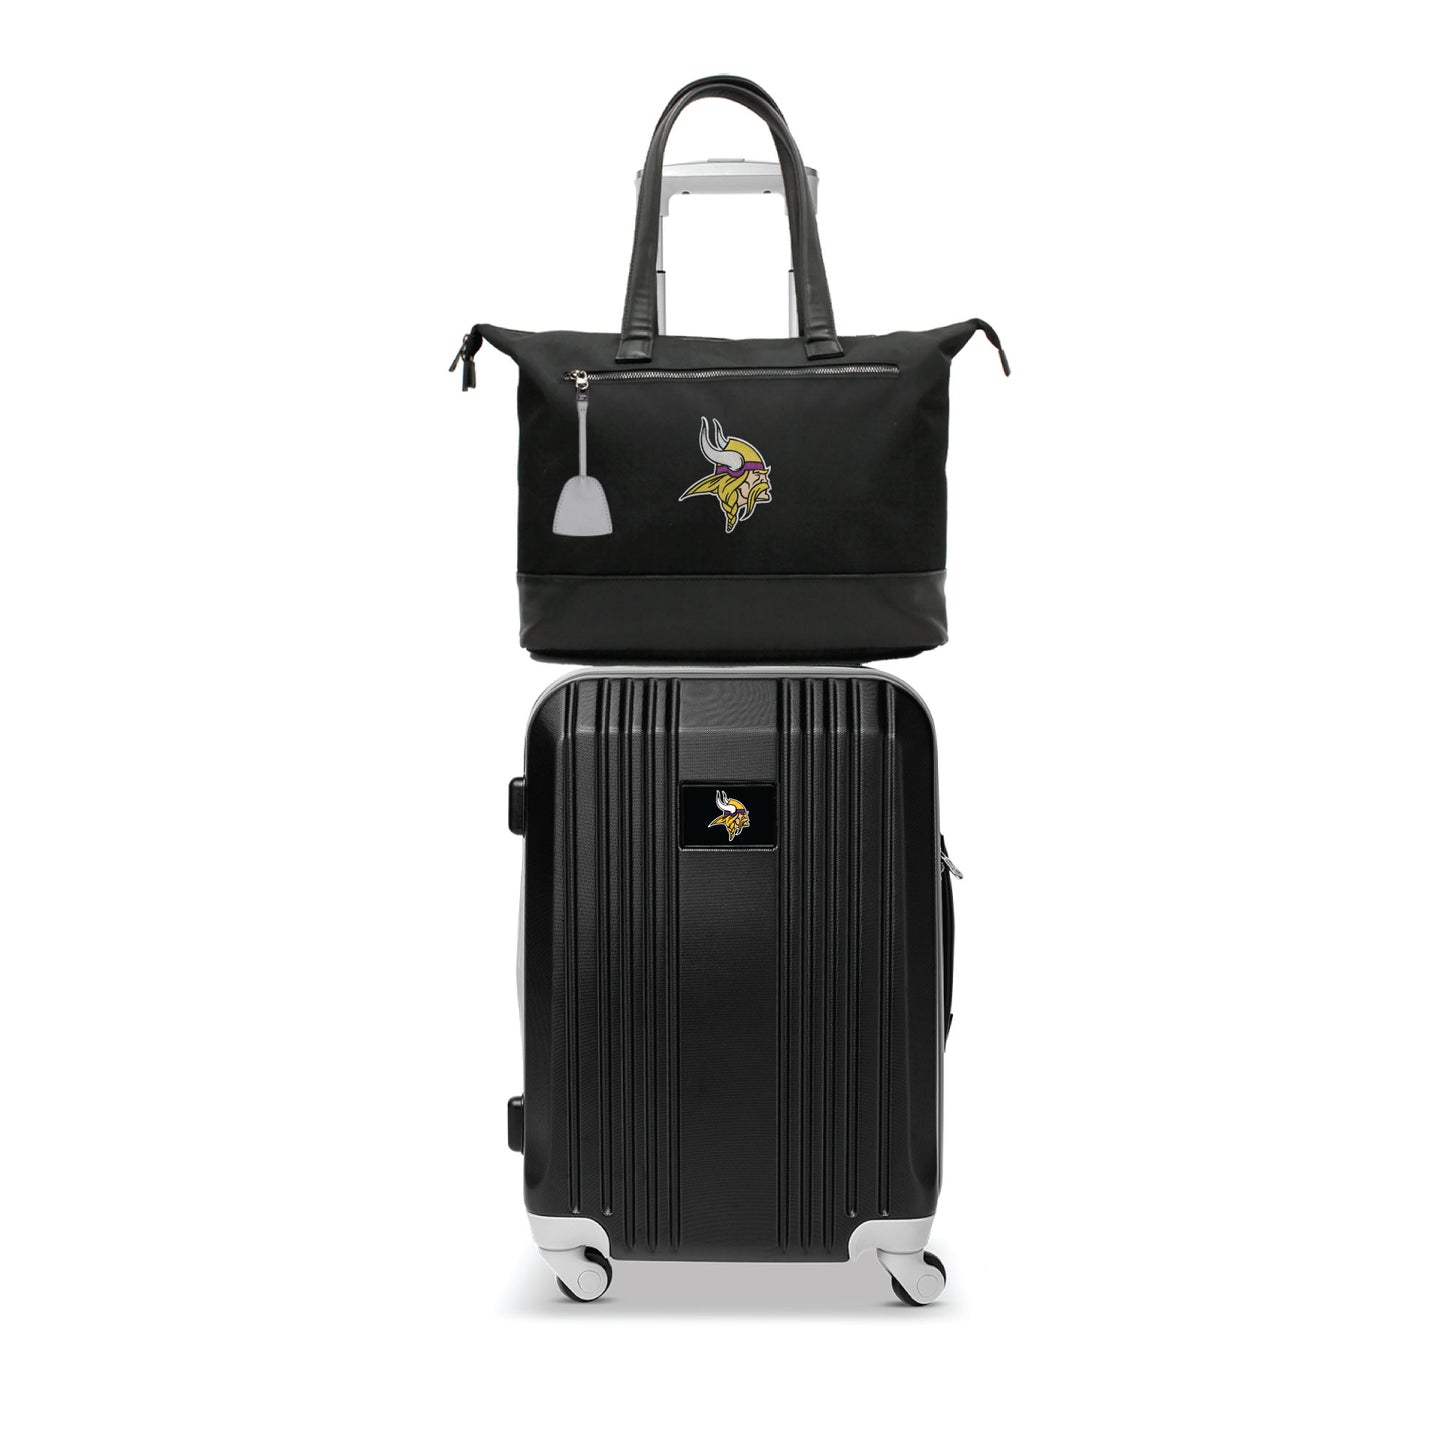 Minnesota Vikings Premium Laptop Tote Bag and Luggage Set